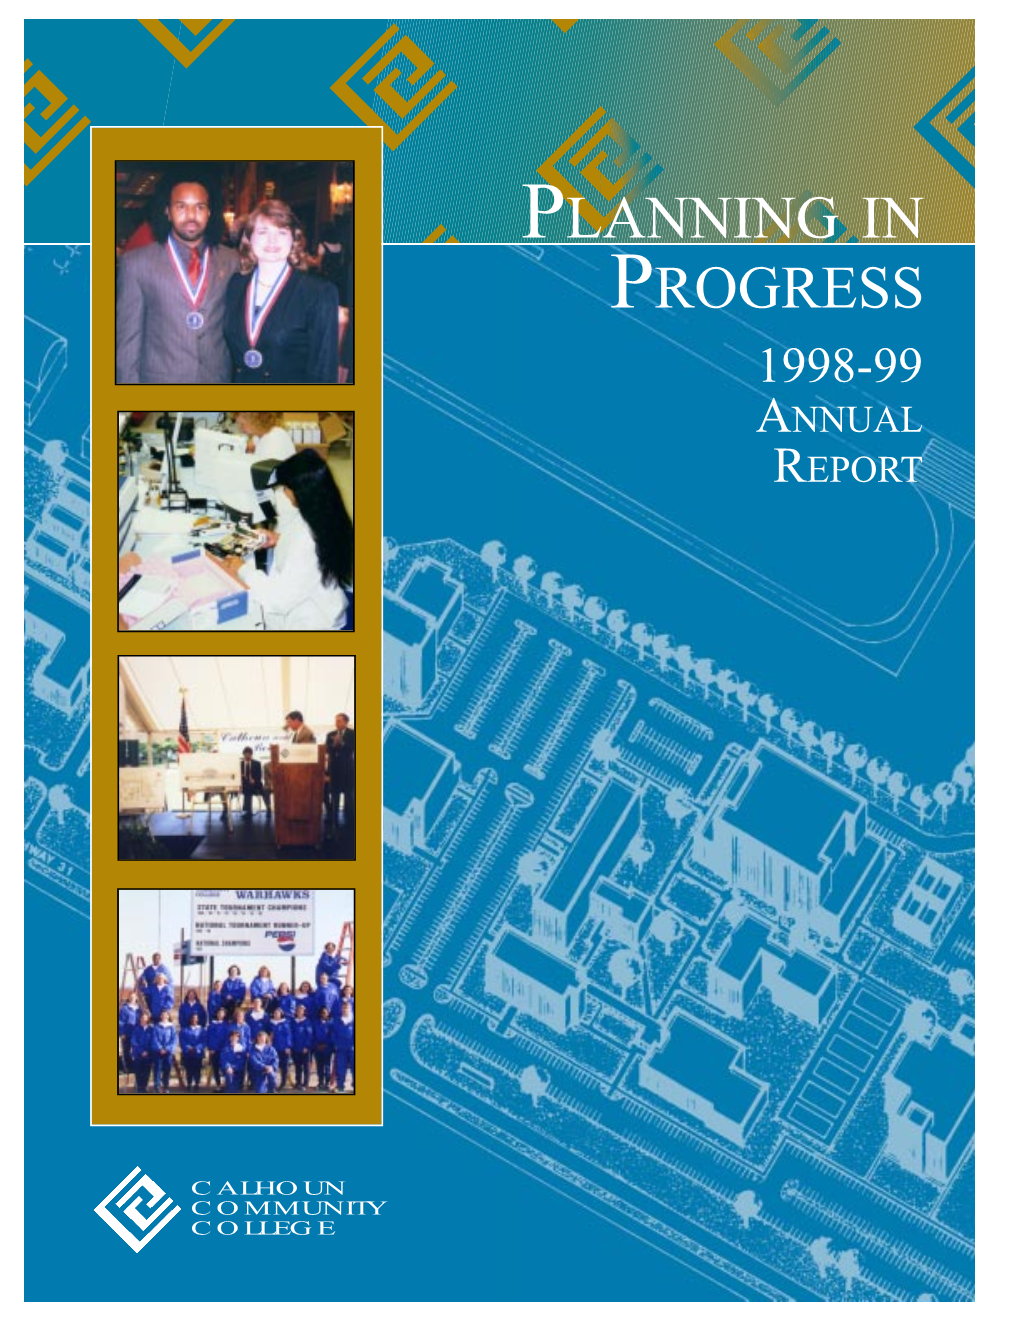 1998-99 Annual Report